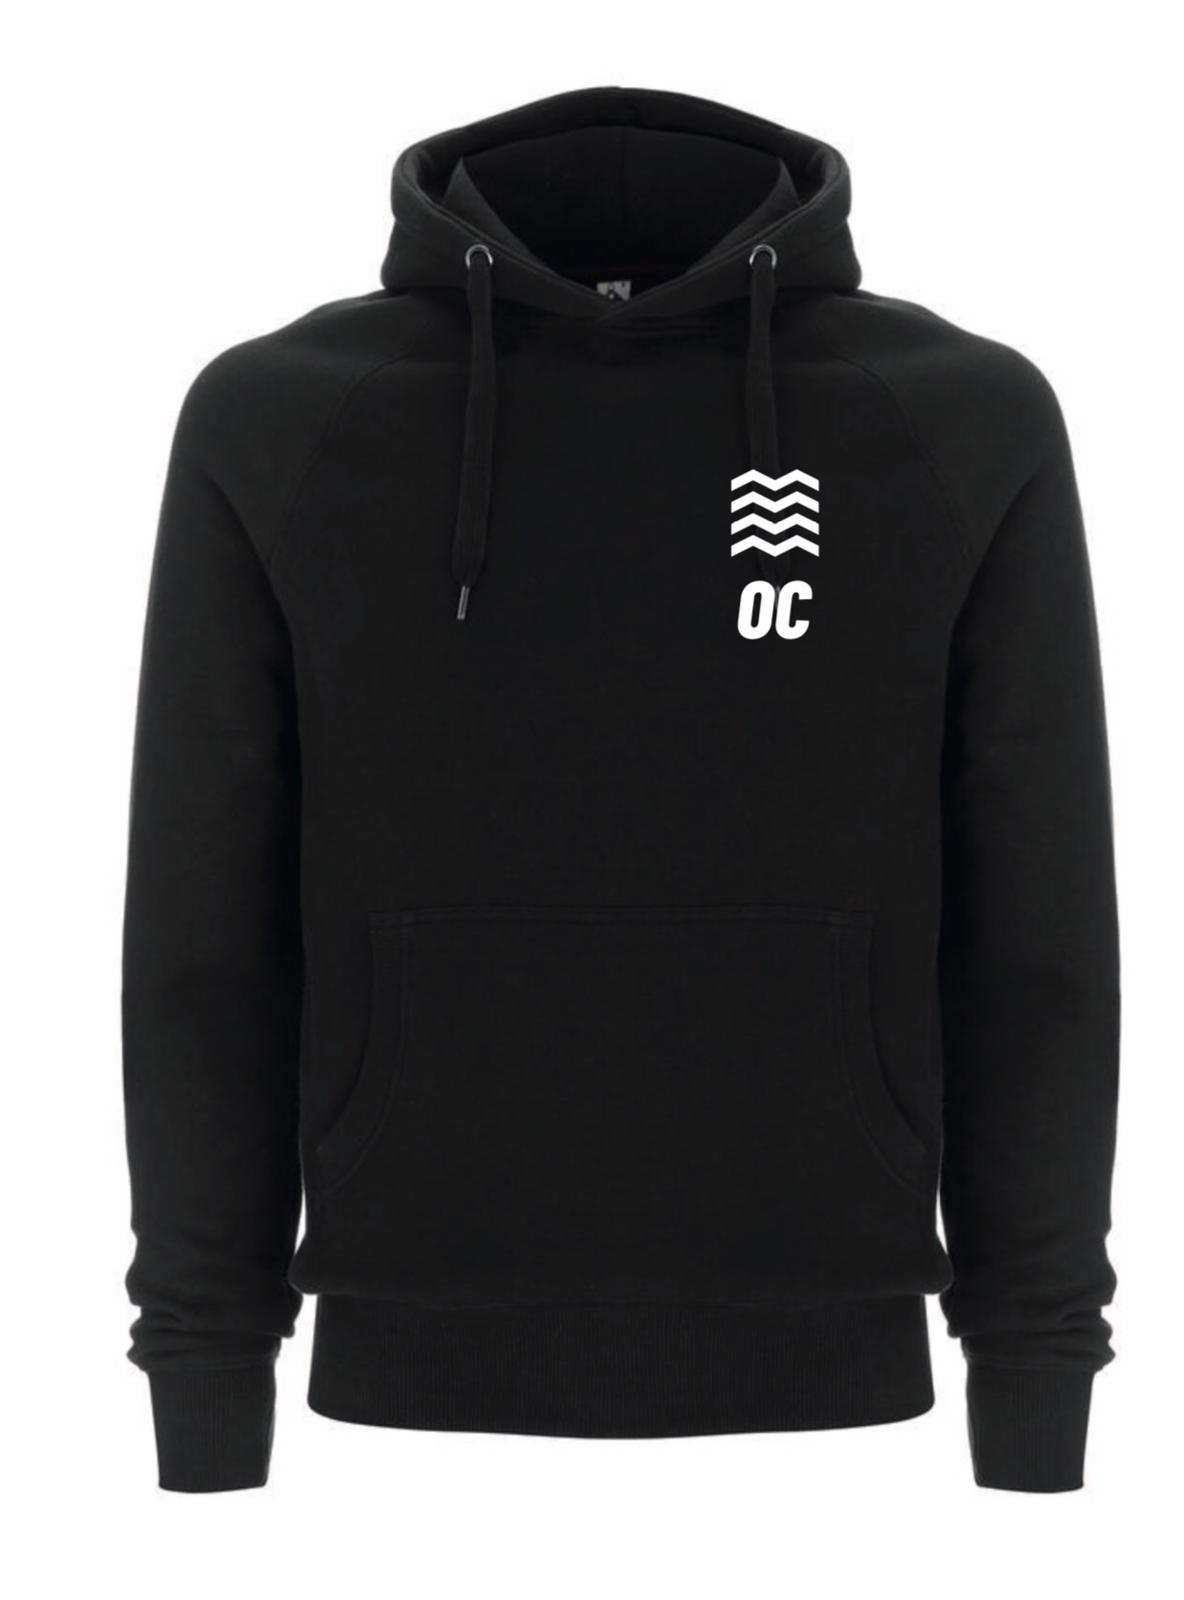 OC Organic Cotton Black Hoodie